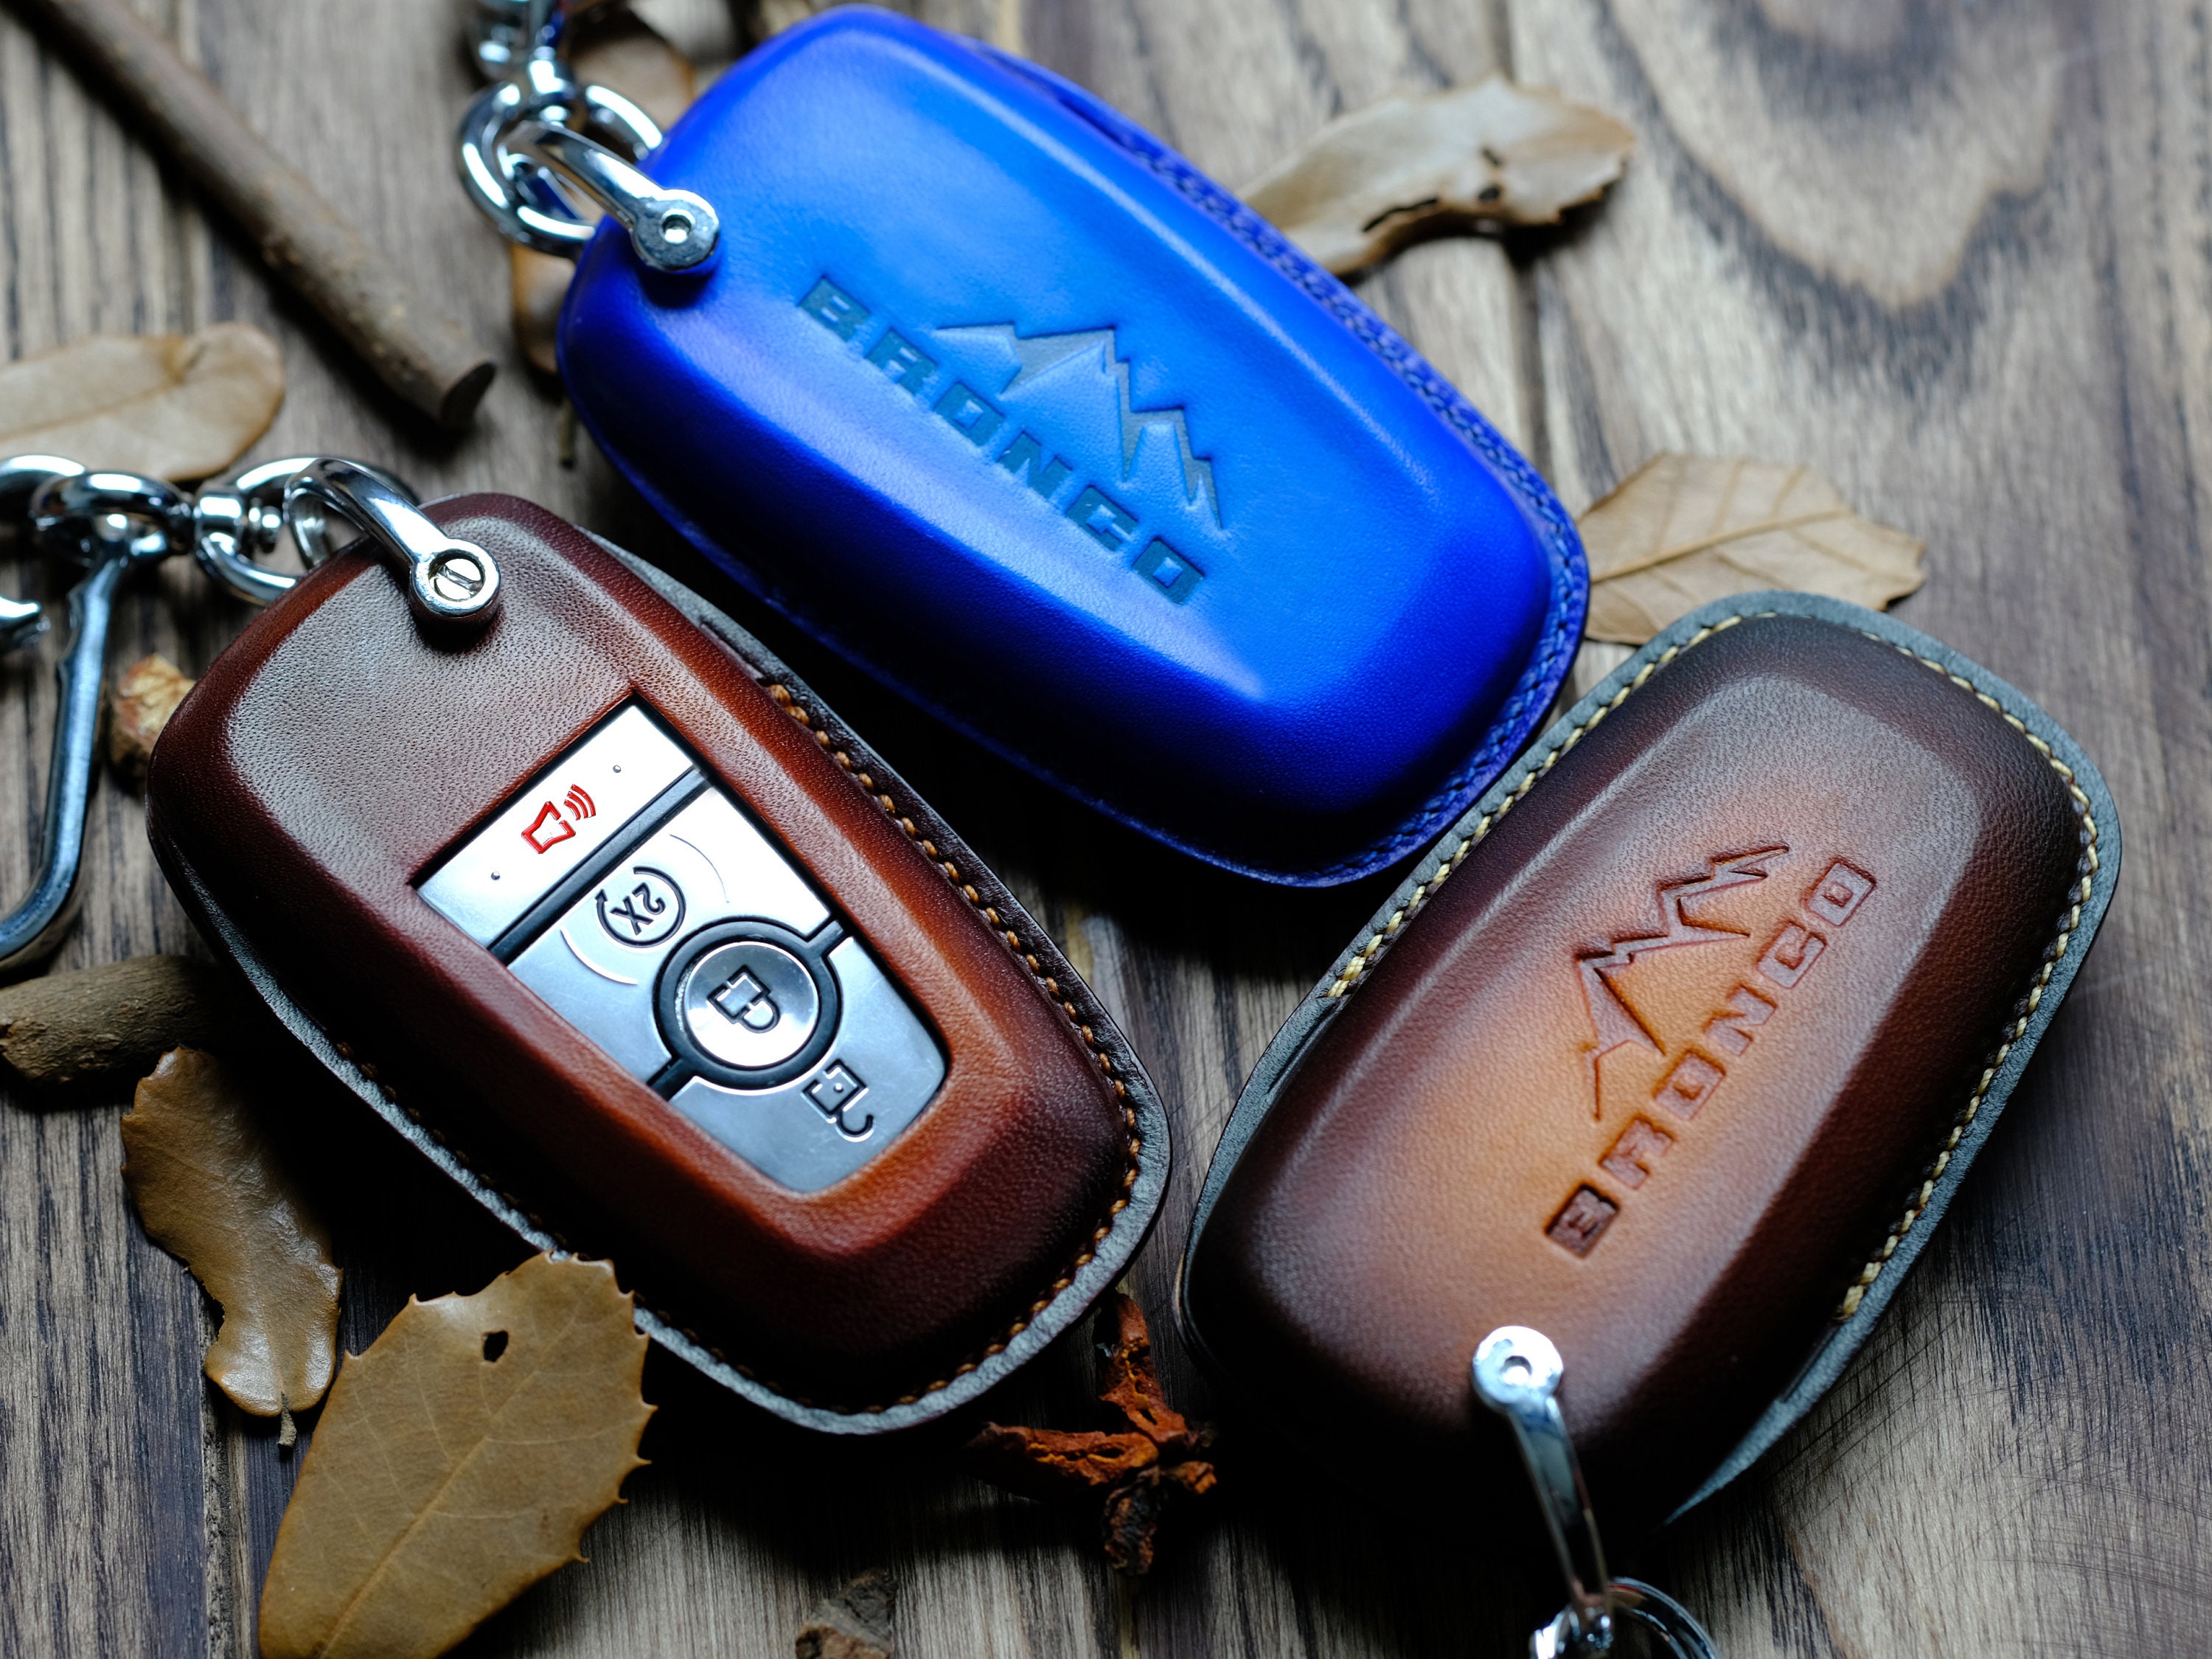 Universal Premium Car Key Fob Case Genuine Leather Car Smart Key fob Holder  for Remote Key Fob